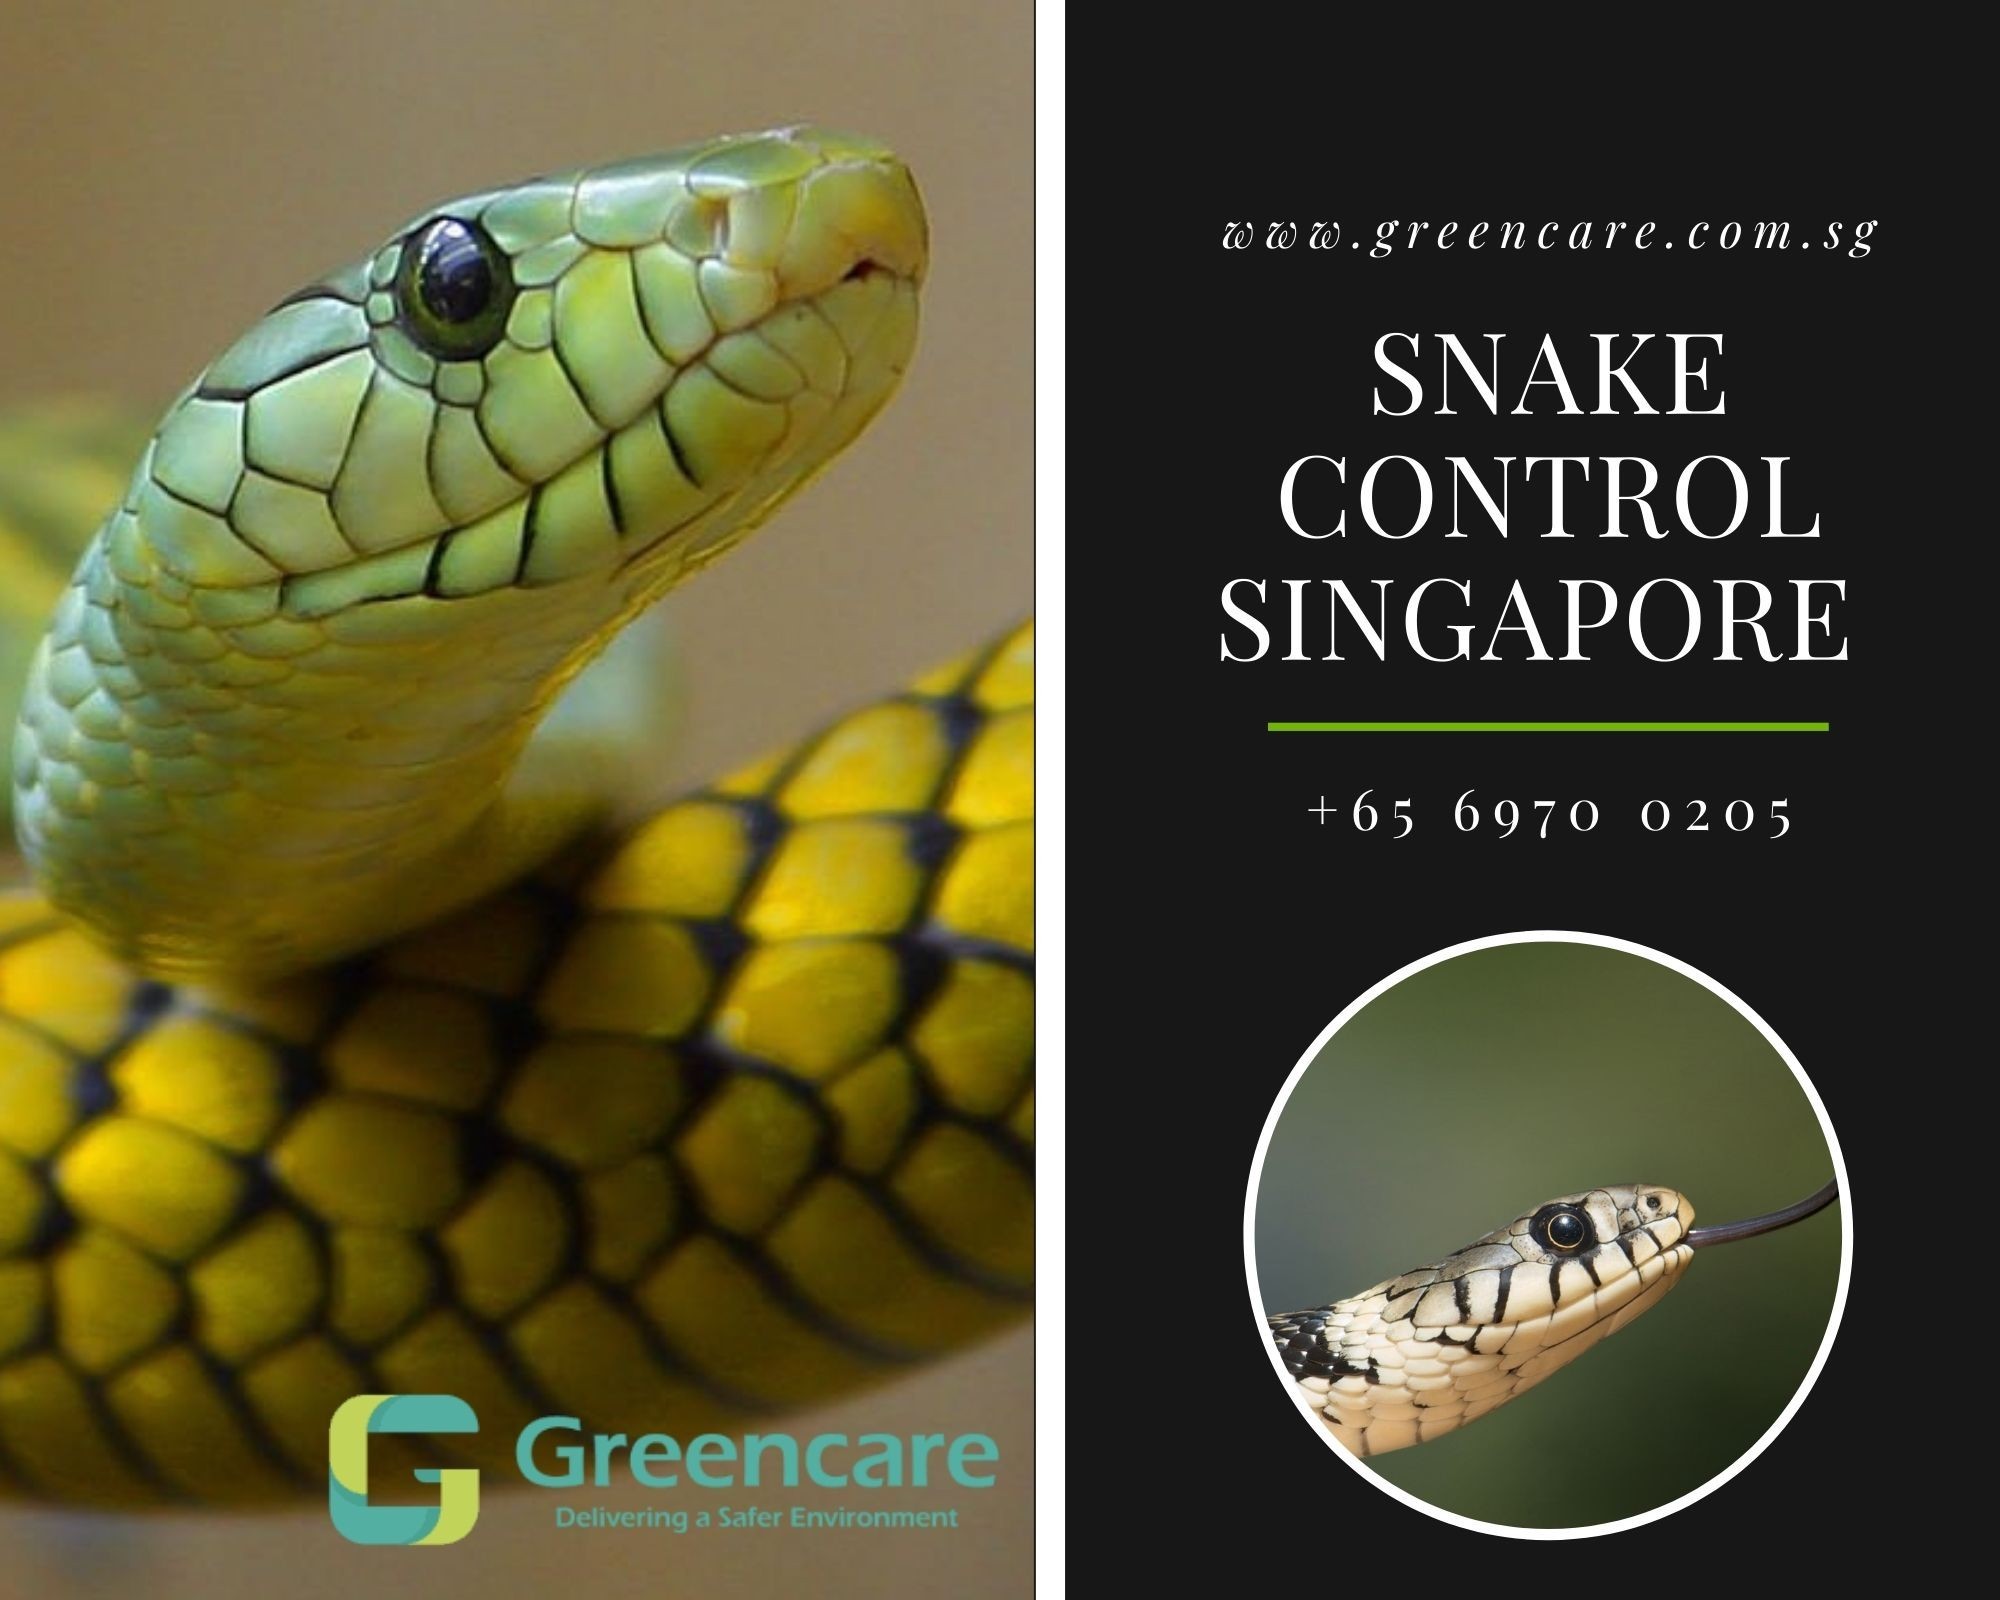 Snake Control Singapore - Greencare